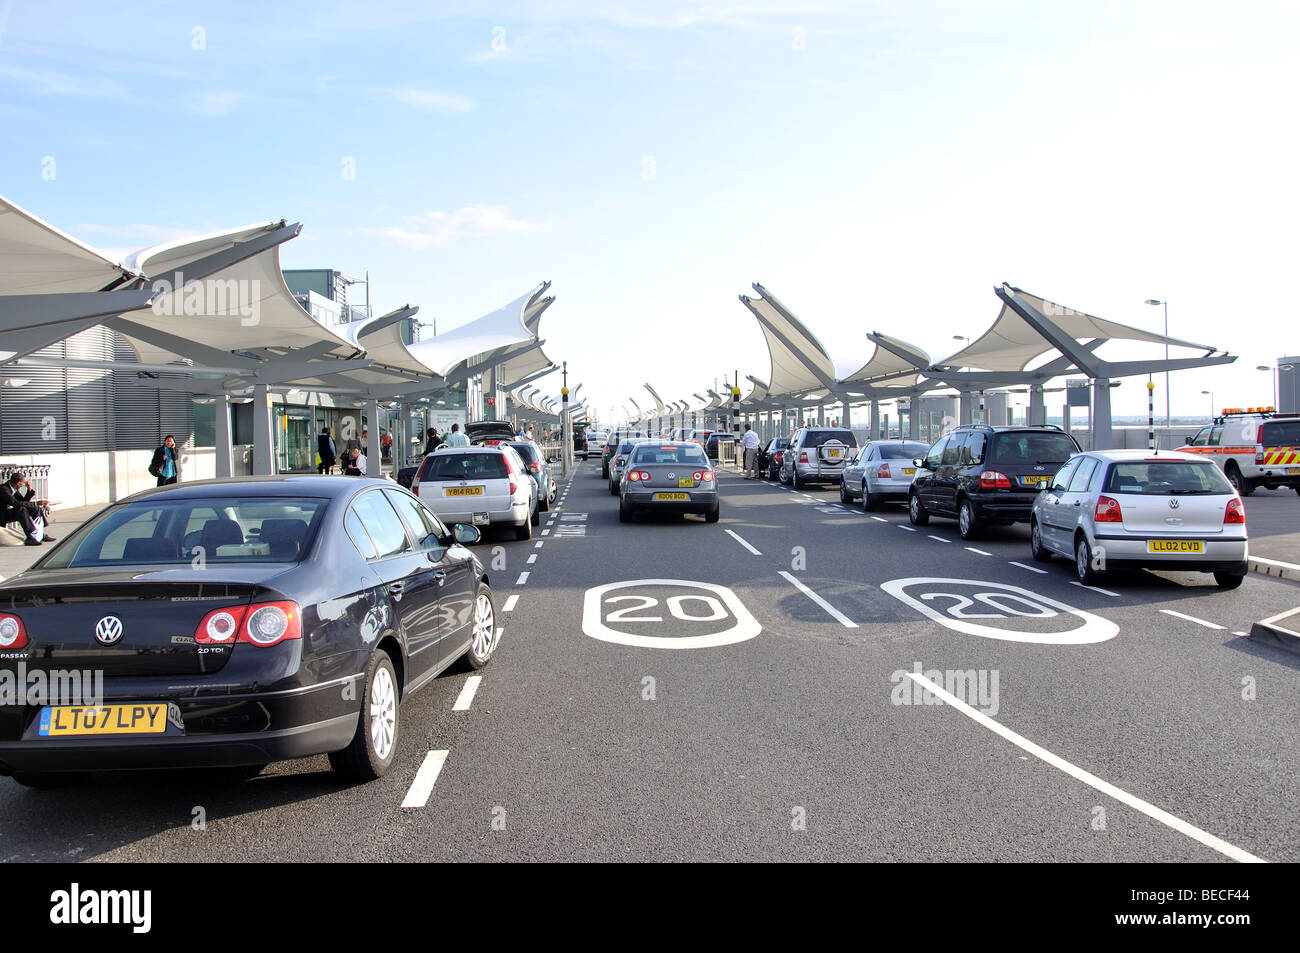 Abflugebene, Terminal 5, Flughafen Heathrow, London Borough of Hounslow, Greater London, England, Großbritannien Stockfoto